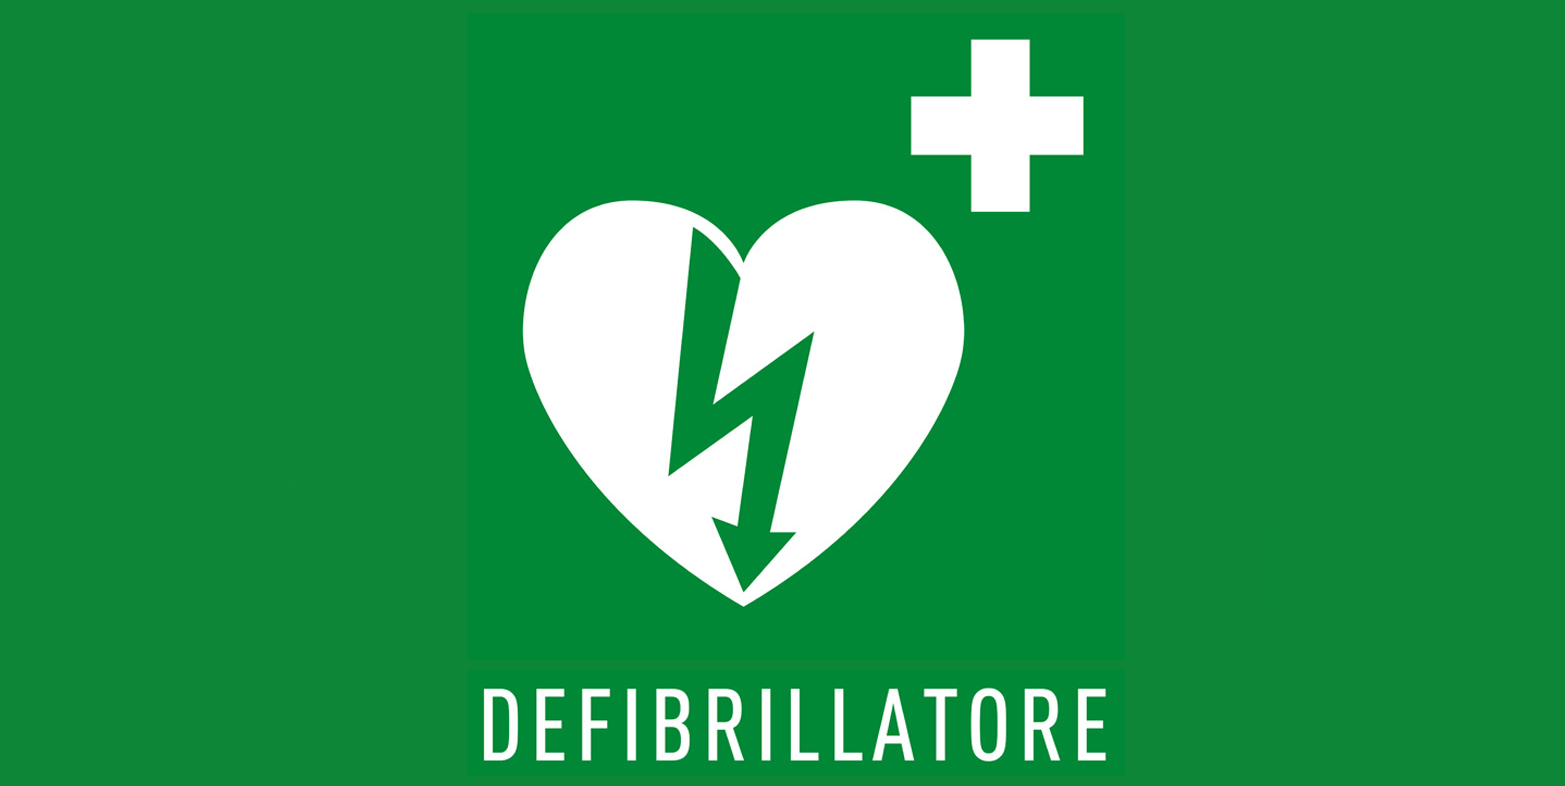 images/NewsFederazione/defibrillatore-3.png